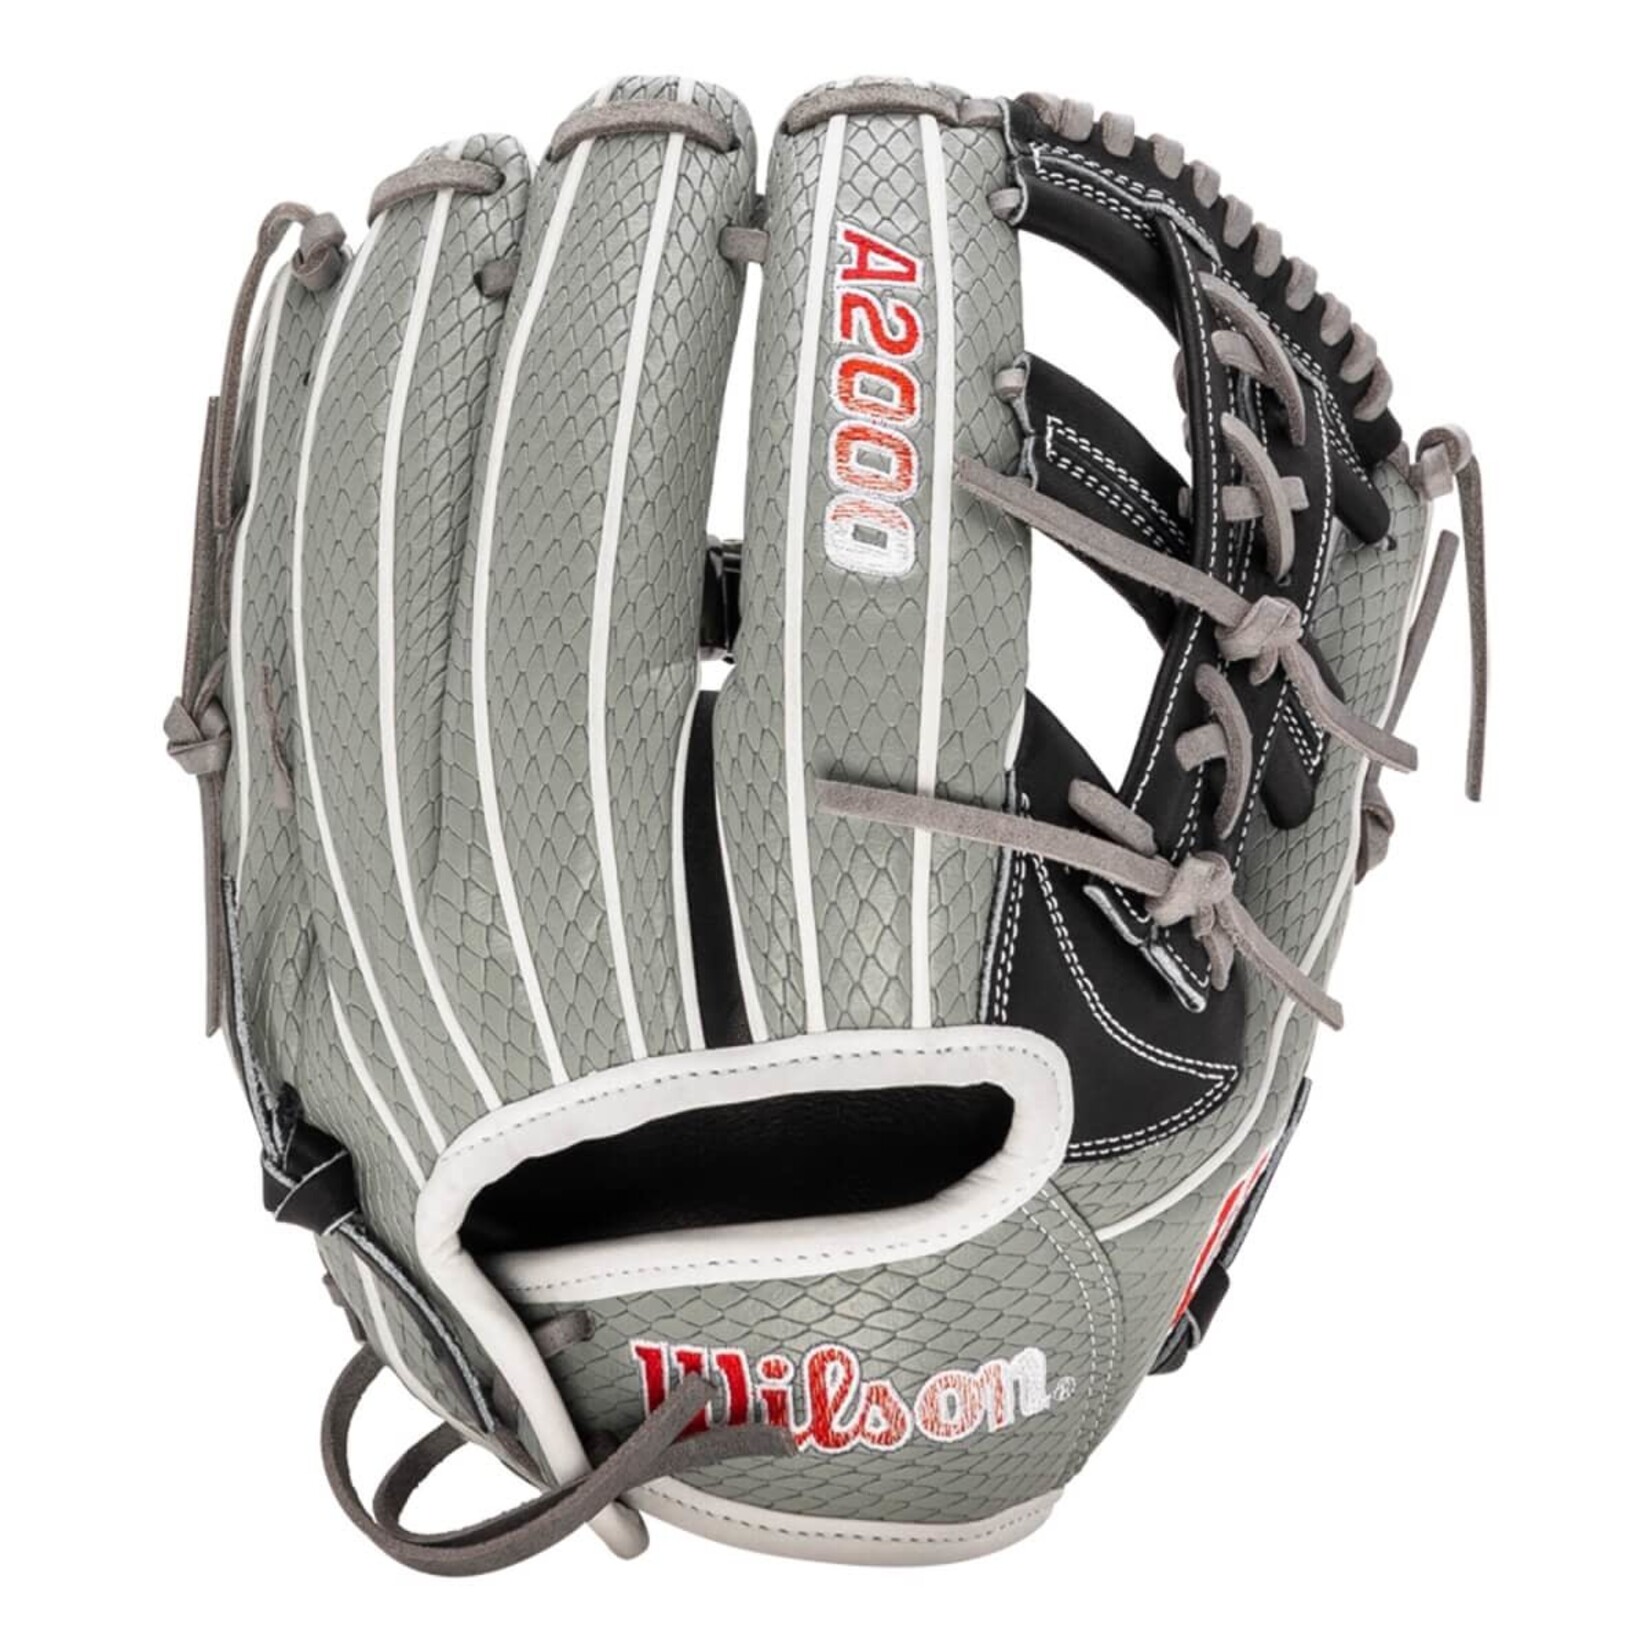 Wilson Wilson Baseball Glove, A2000 Fastpitch FP75 w/SuperSkin, Reg, 11.75", Infield Pattern, Blk/GrySSS/Red/Wht